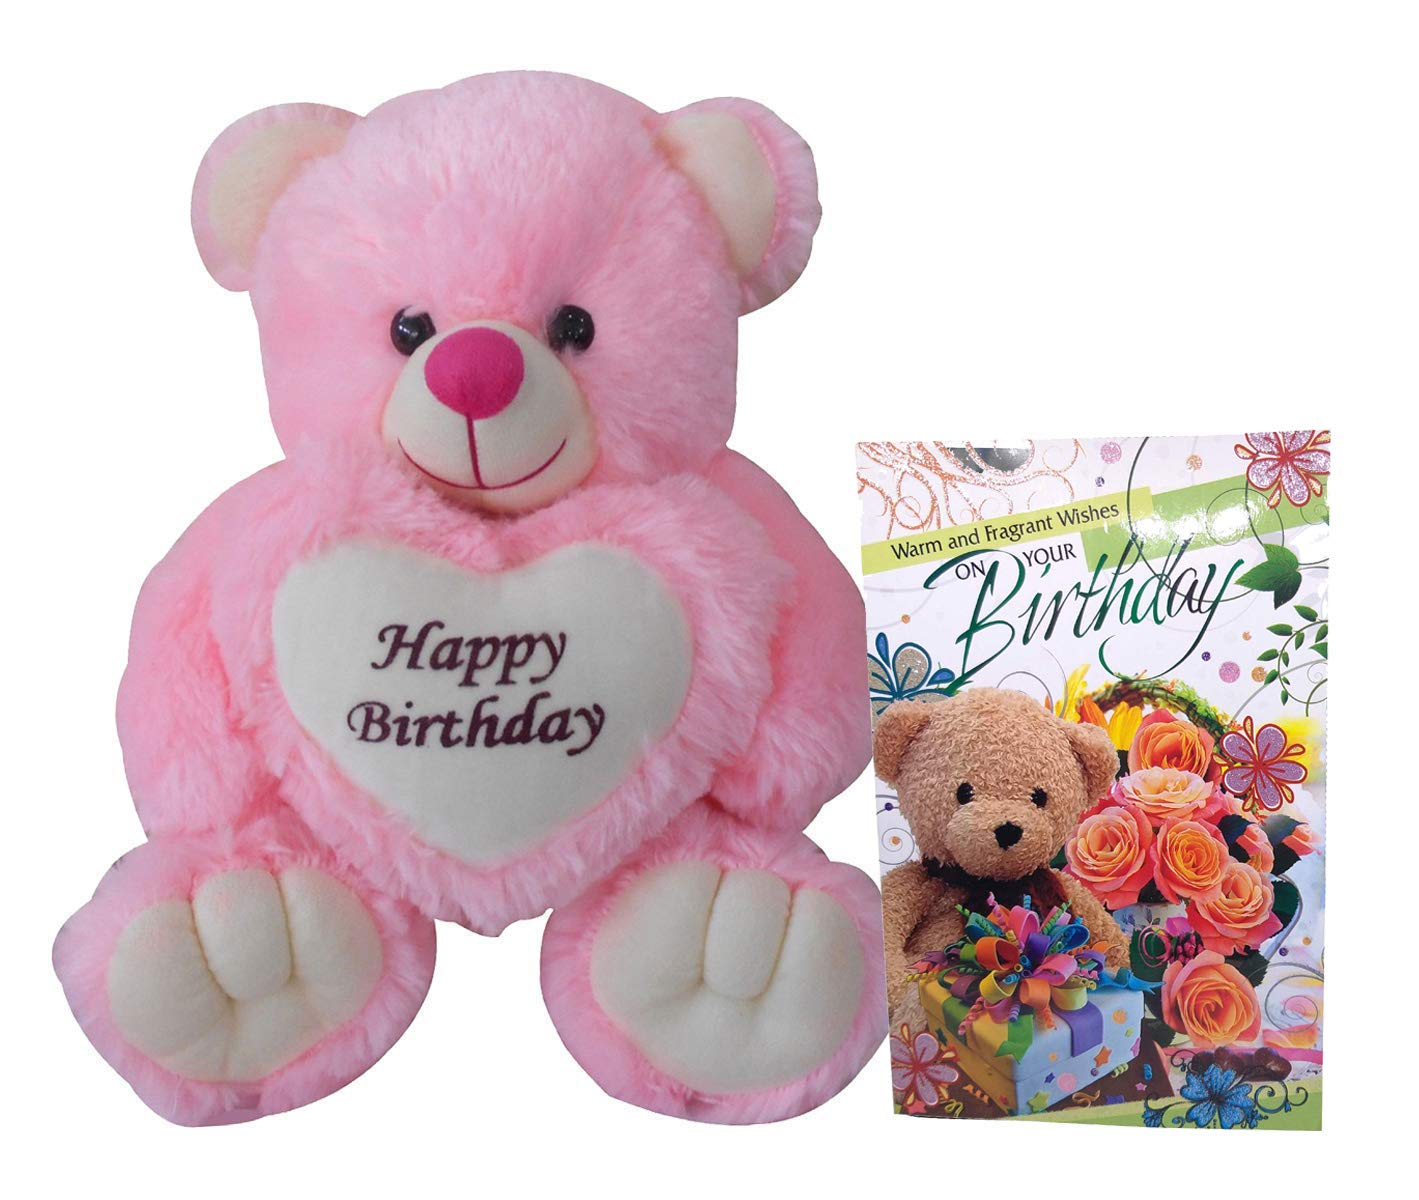 Happy Birthday Teddy Bear & Birthday Greeting Card | Get up to 60% off